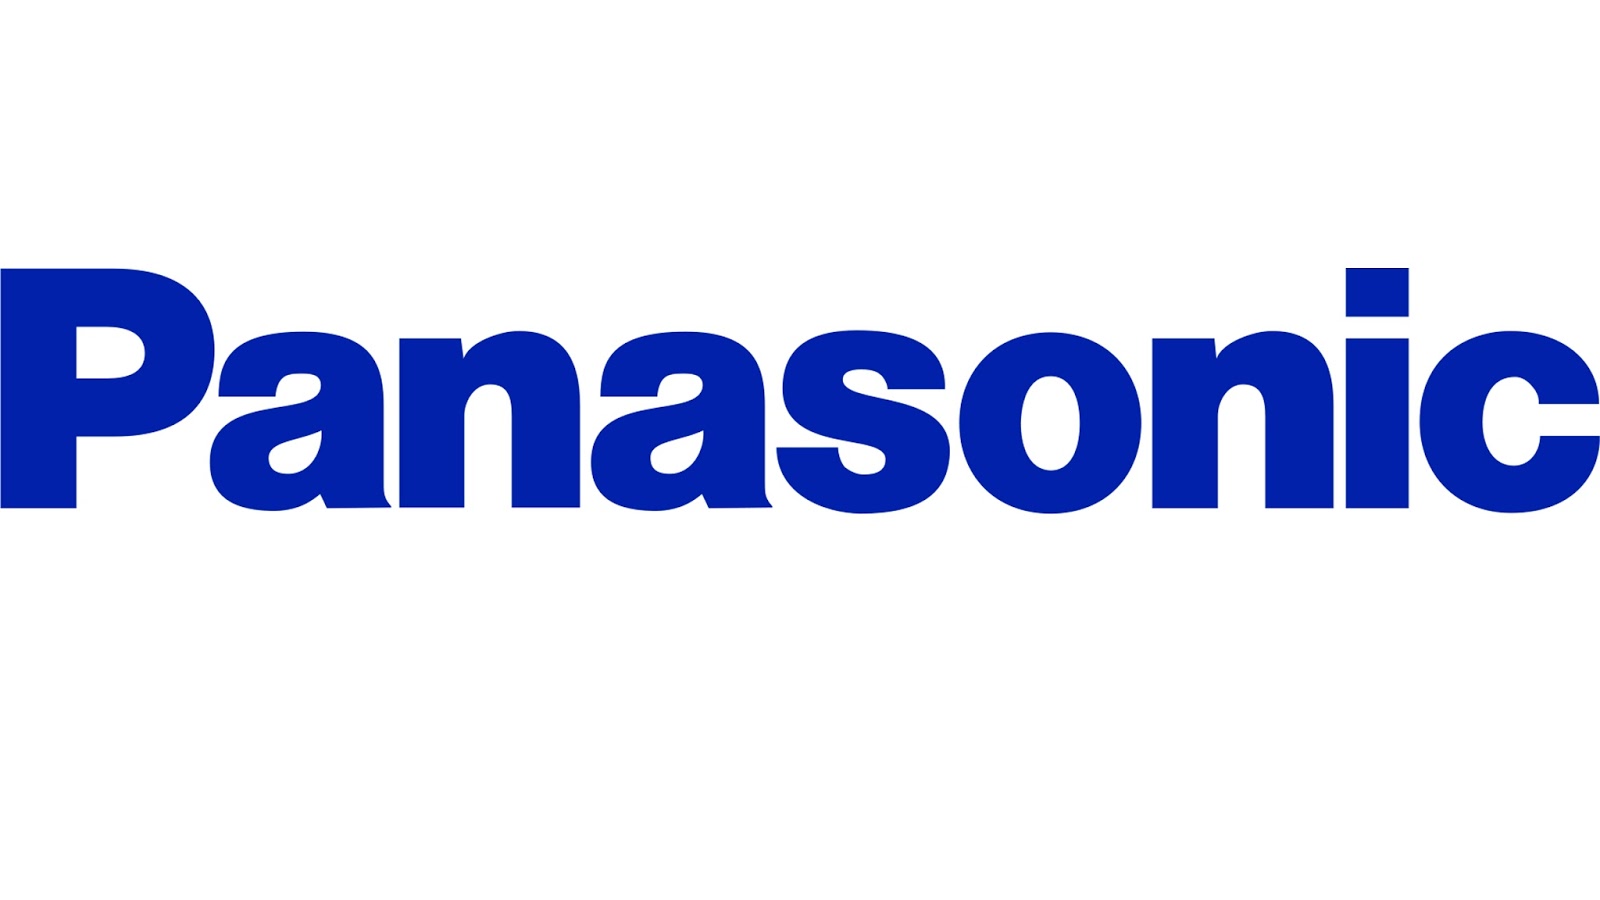 Panasonic Wallpaper Hd - Panasonic Logo Hd - 1600x900 Wallpaper 